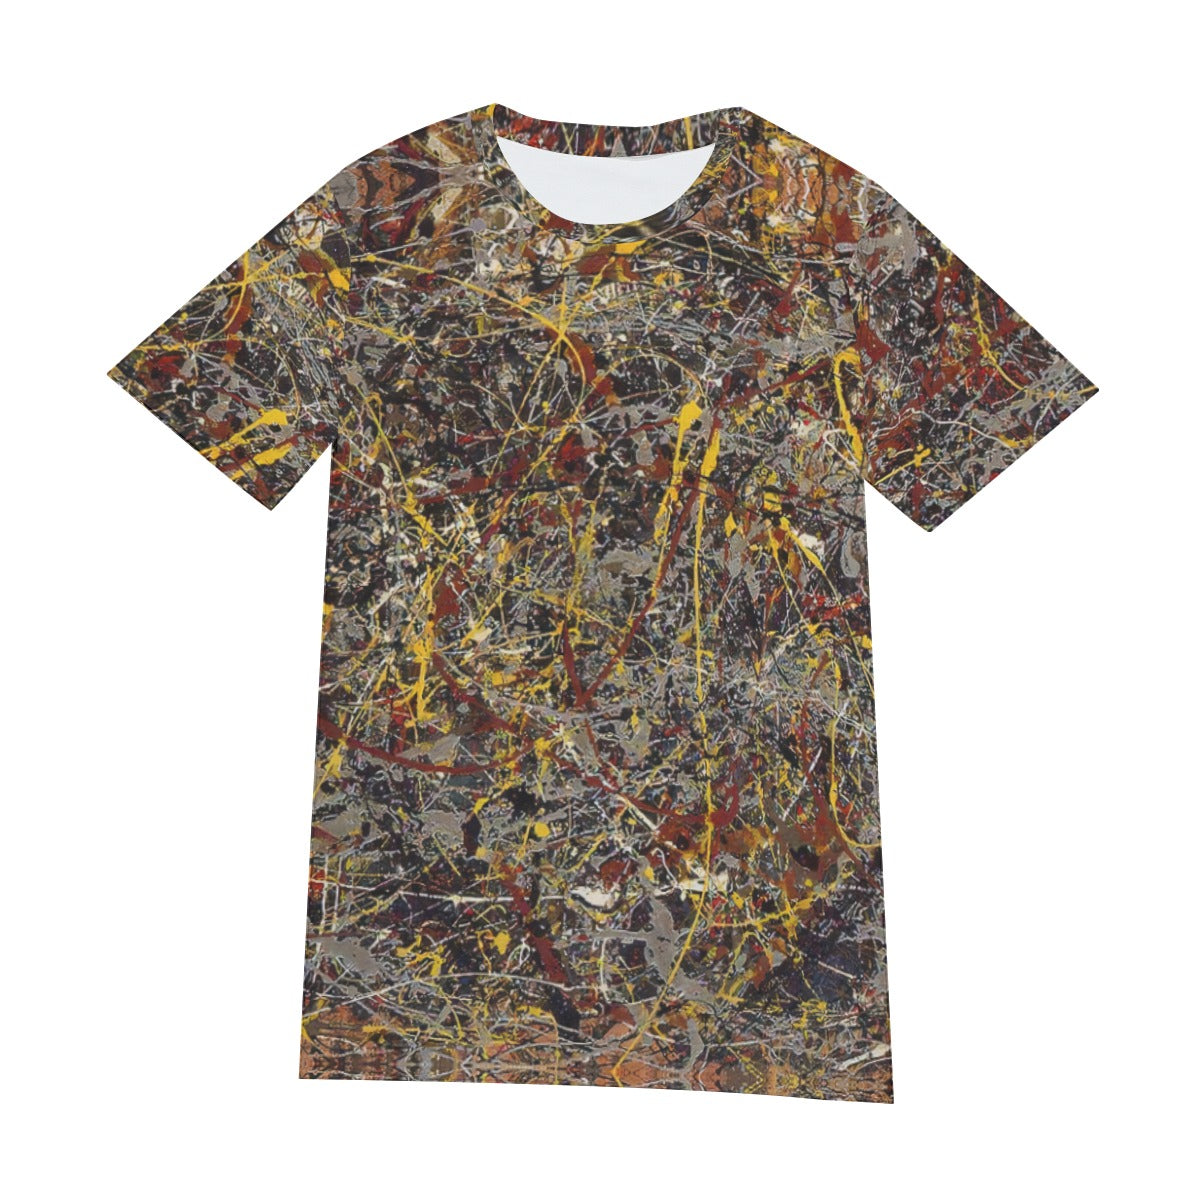 Umělecké tričko č. 5 1948 od Jacksona Pollocka